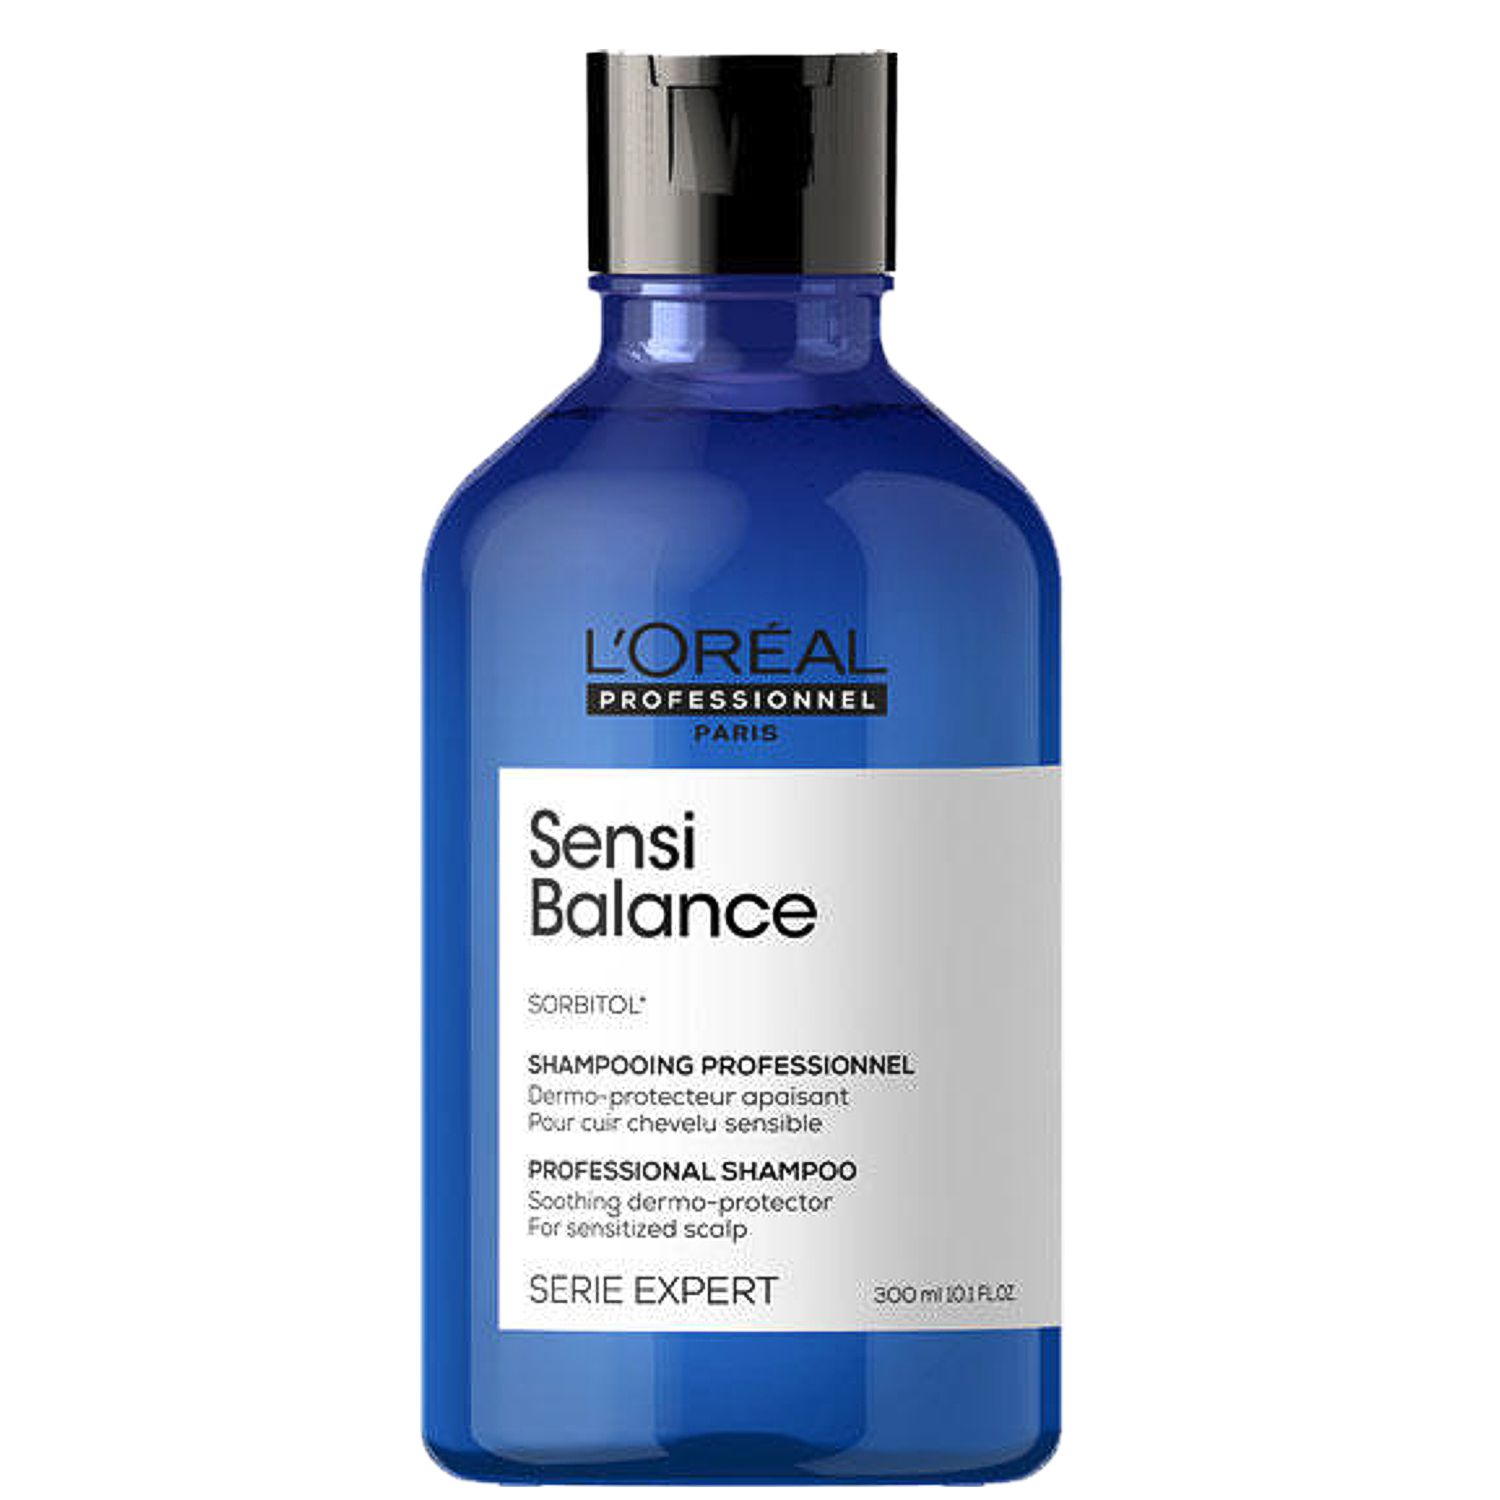 L'ORÉAL Expert SENSI BALANCE Professional Shampoo 300 ml